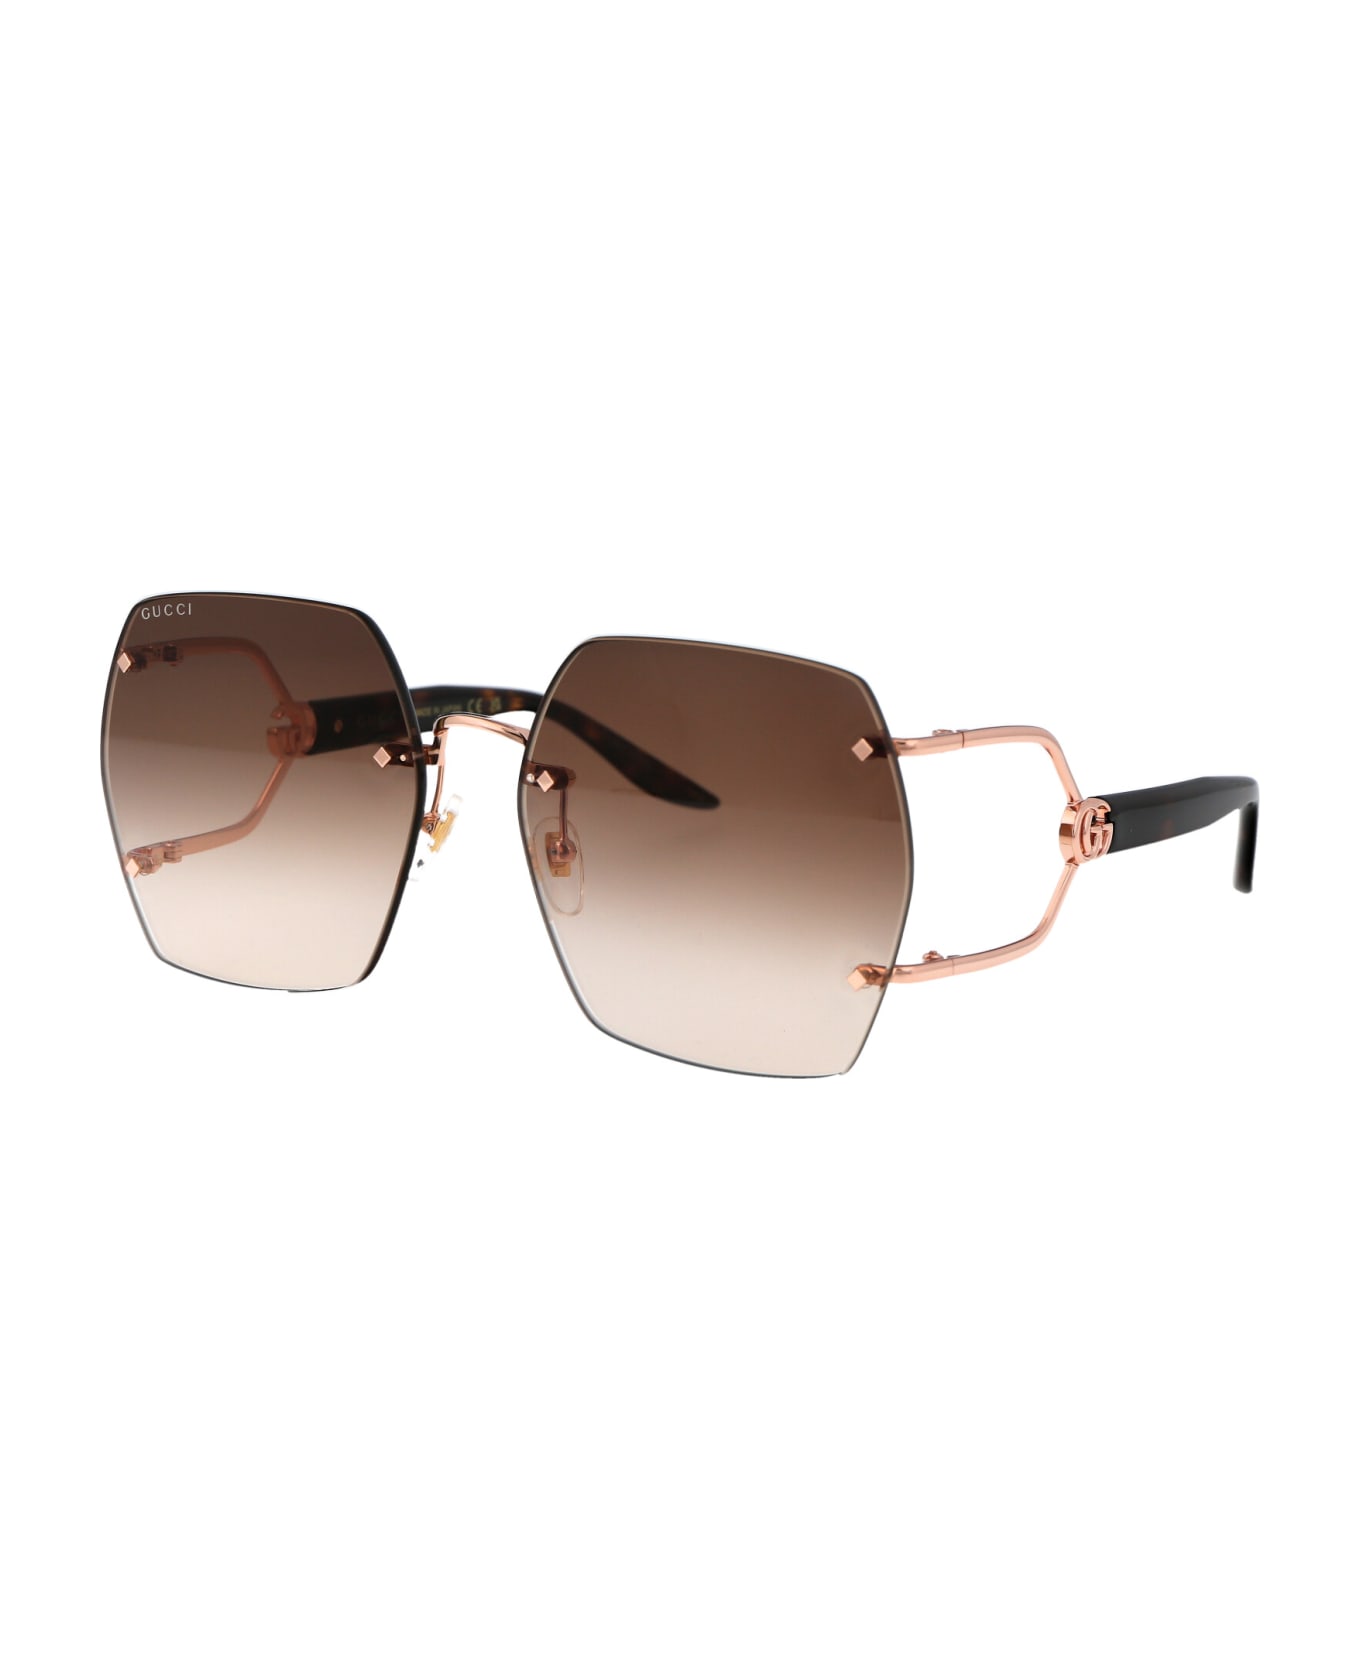 Gucci Eyewear Gg1562s Sunglasses - 002 GOLD HAVANA BROWN